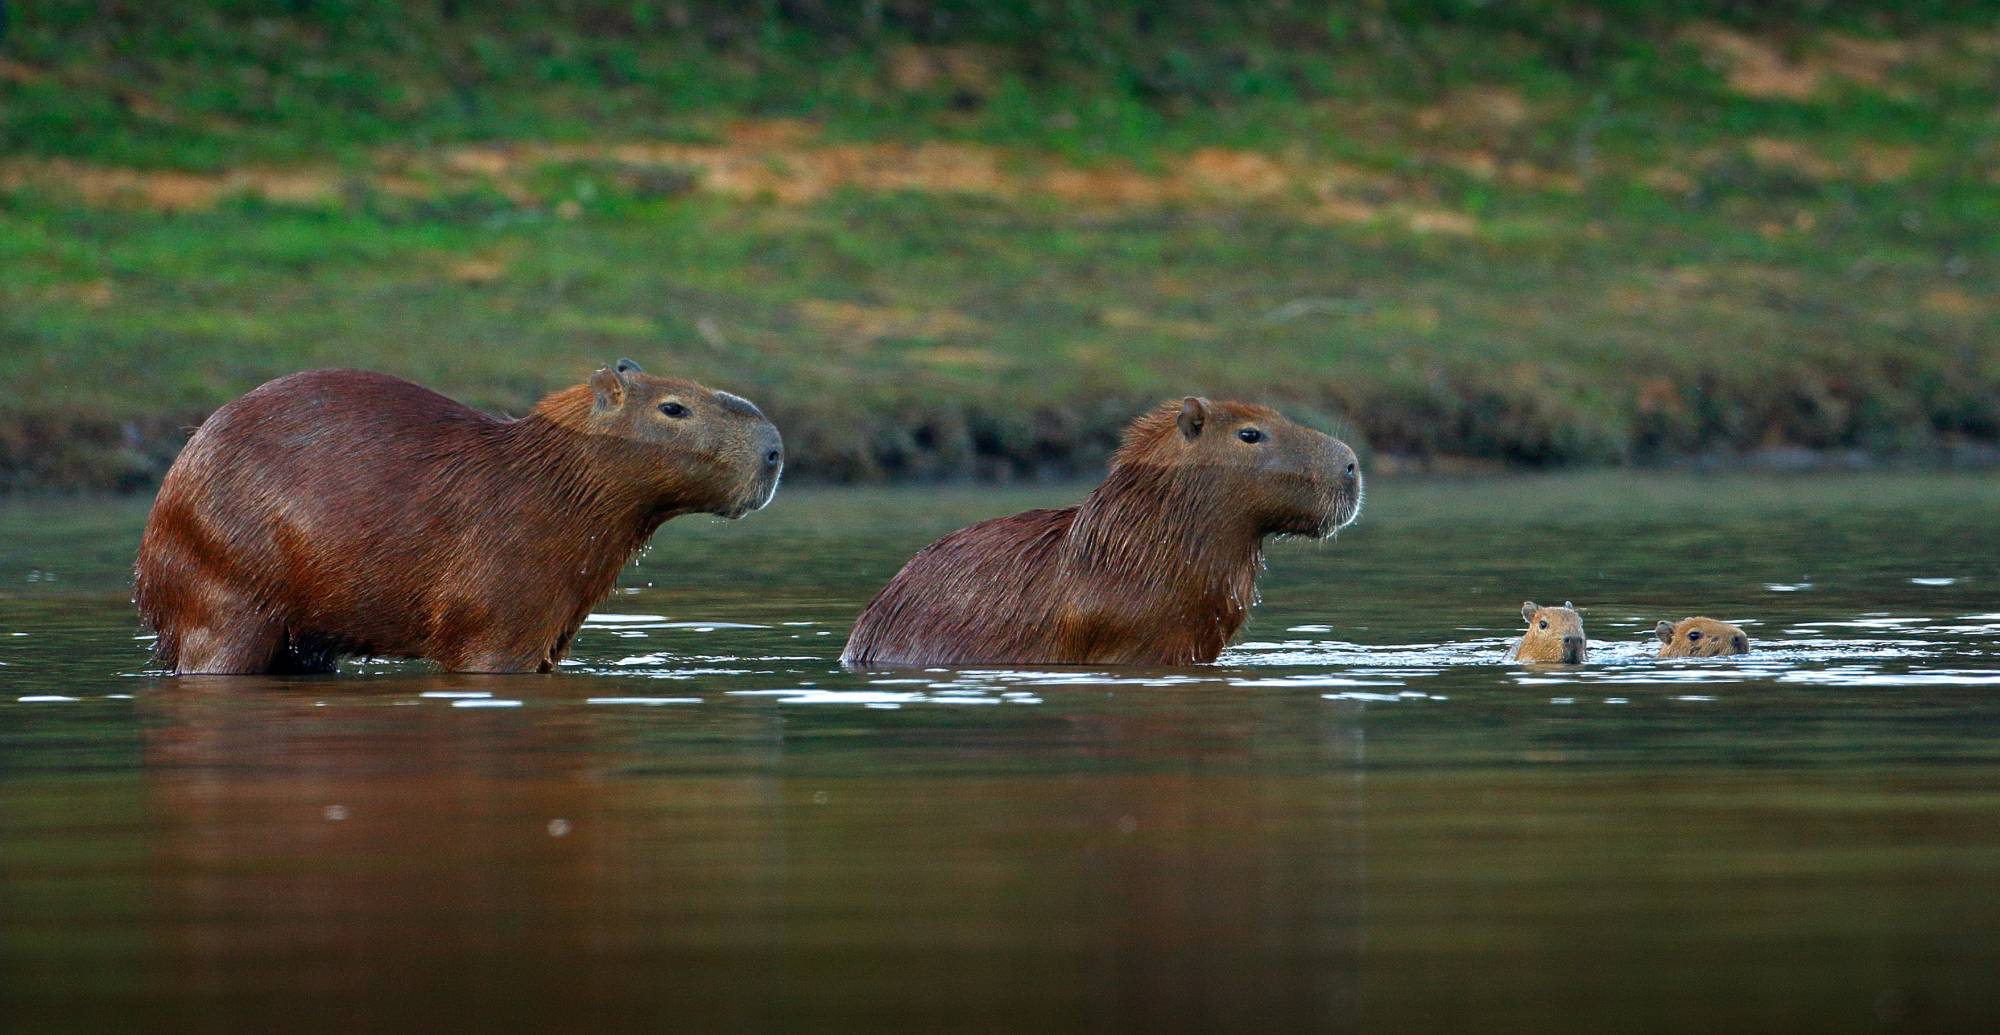 A capybara family in water. Pantanal, Brazil. Image credit: © Ondřej Prosický | Dreamstime